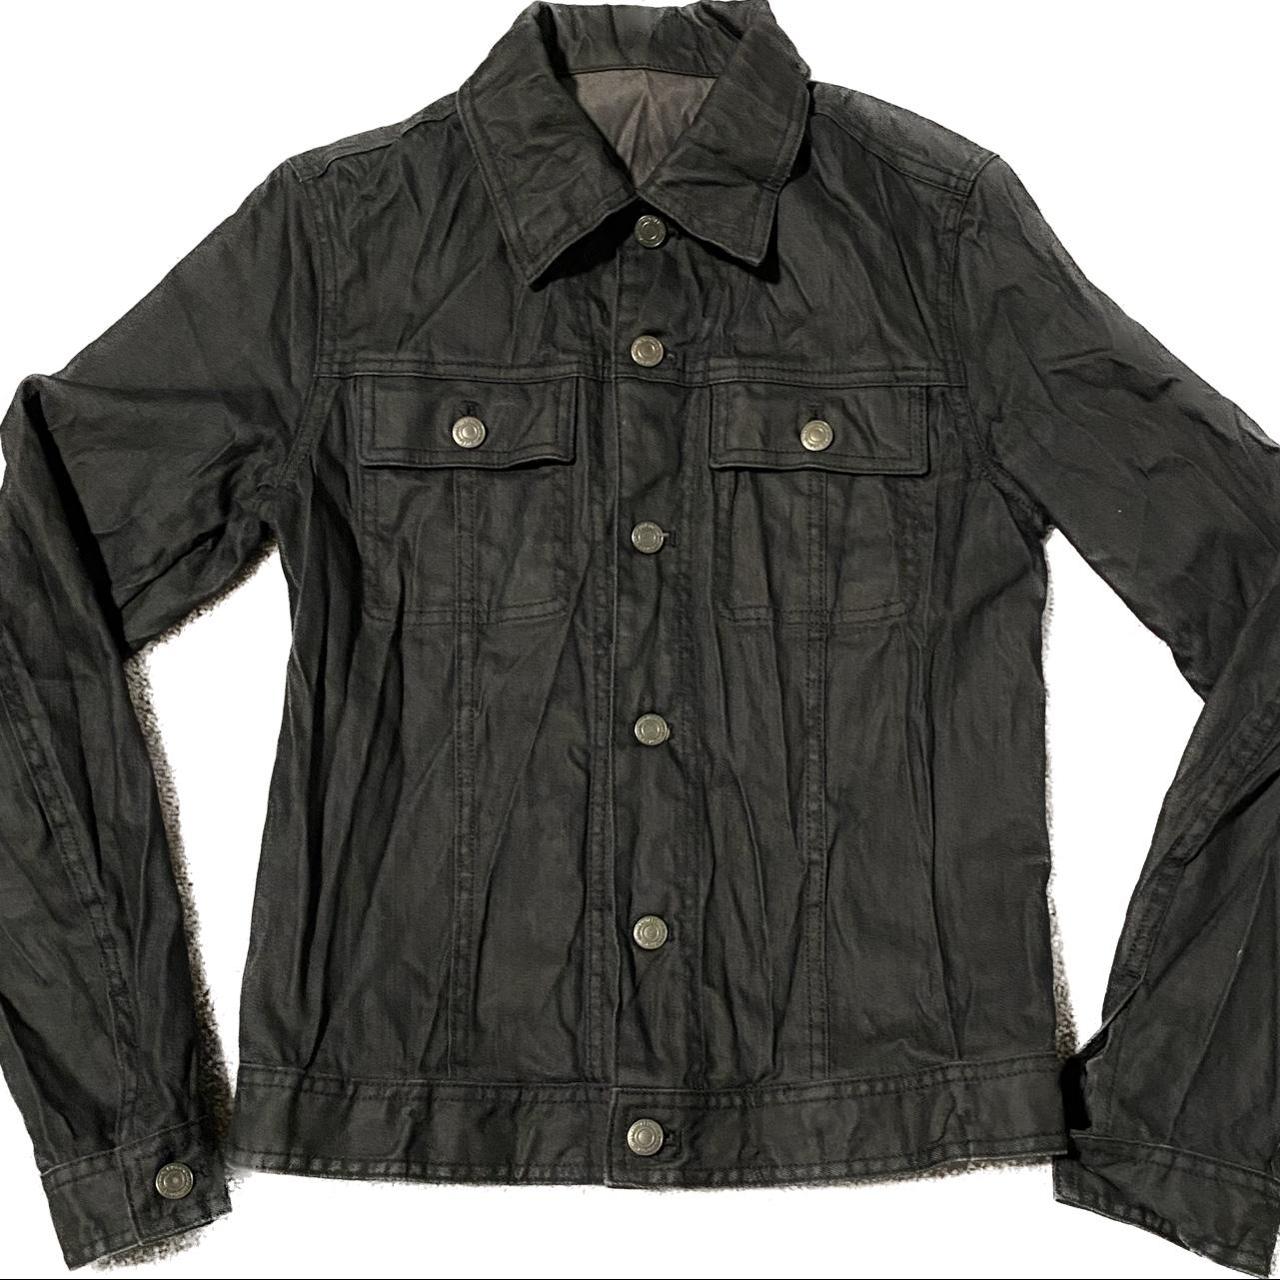 shellac wrinkled denim jacket fits womens xs/s i’d... - Depop